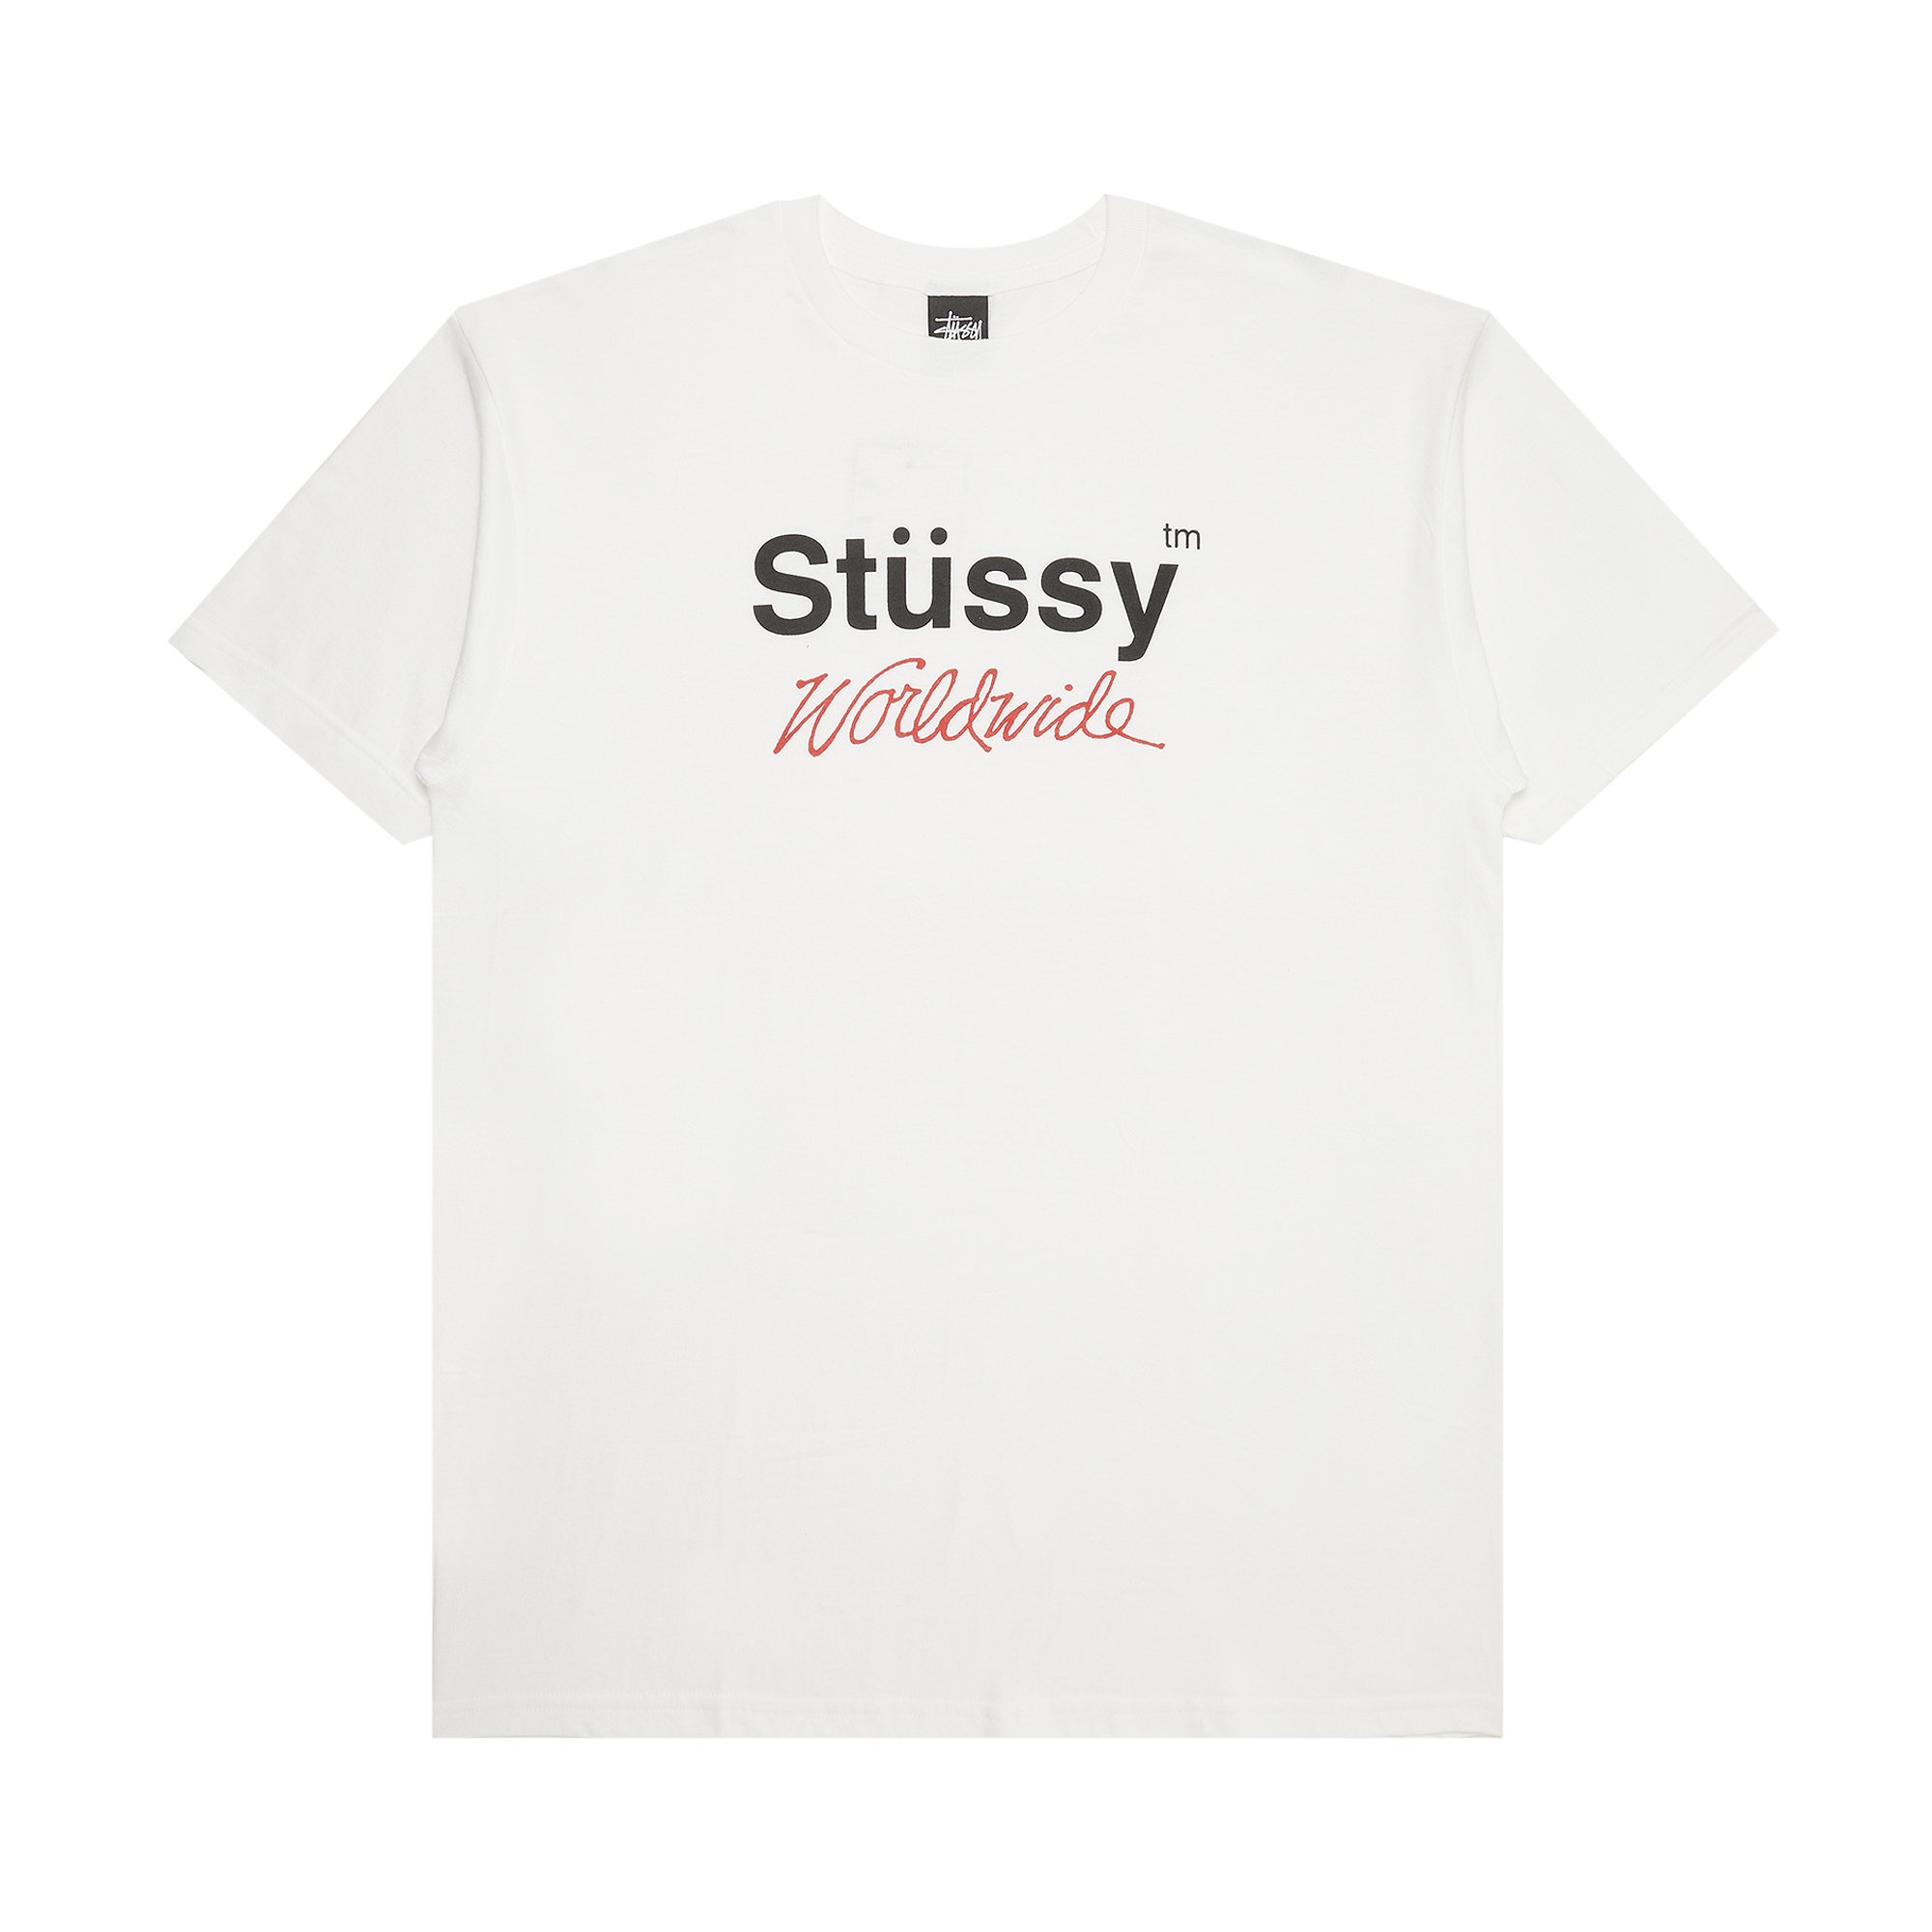 Stussy Worldwide Tee 'White'